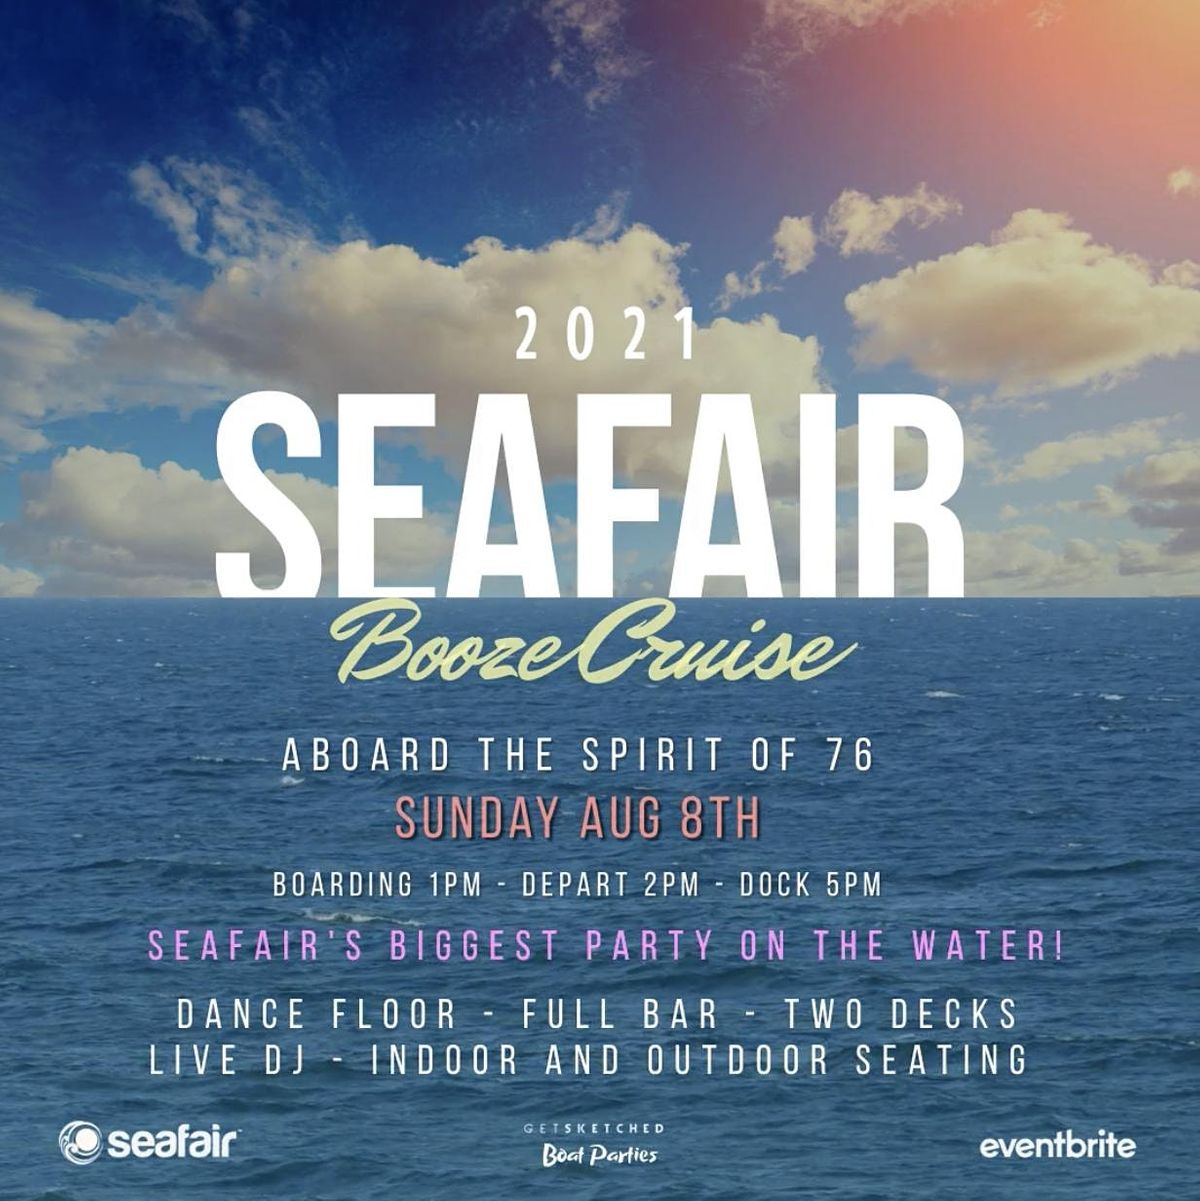 Seafair Booze Cruise 2021 - Sunday